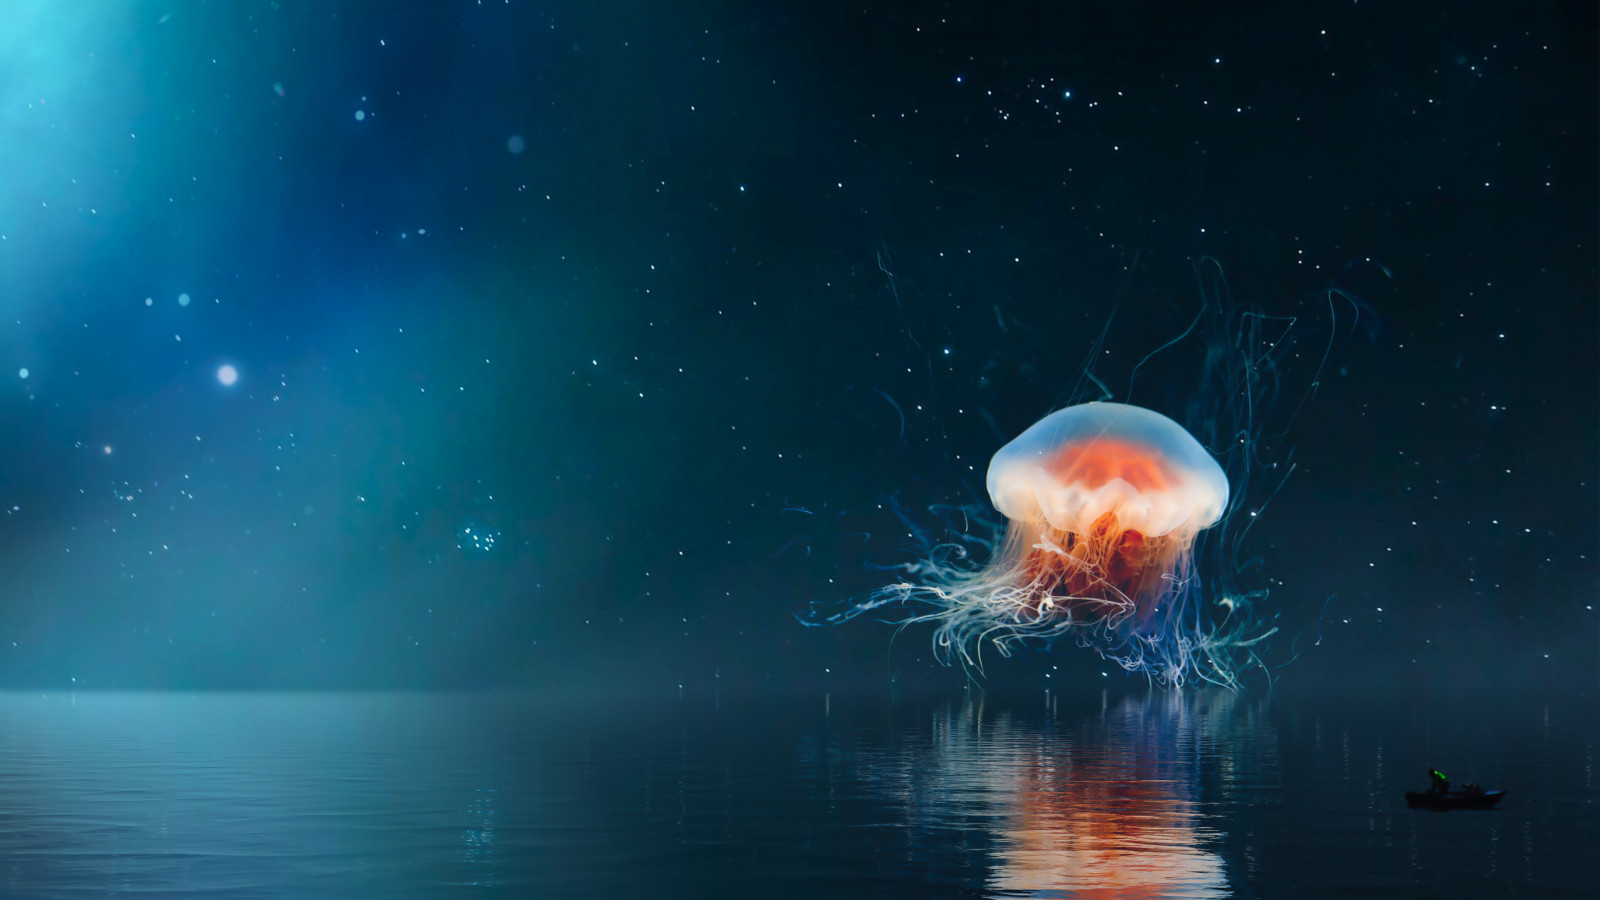 Jellyfish on the night sky wallpaper 1600x900